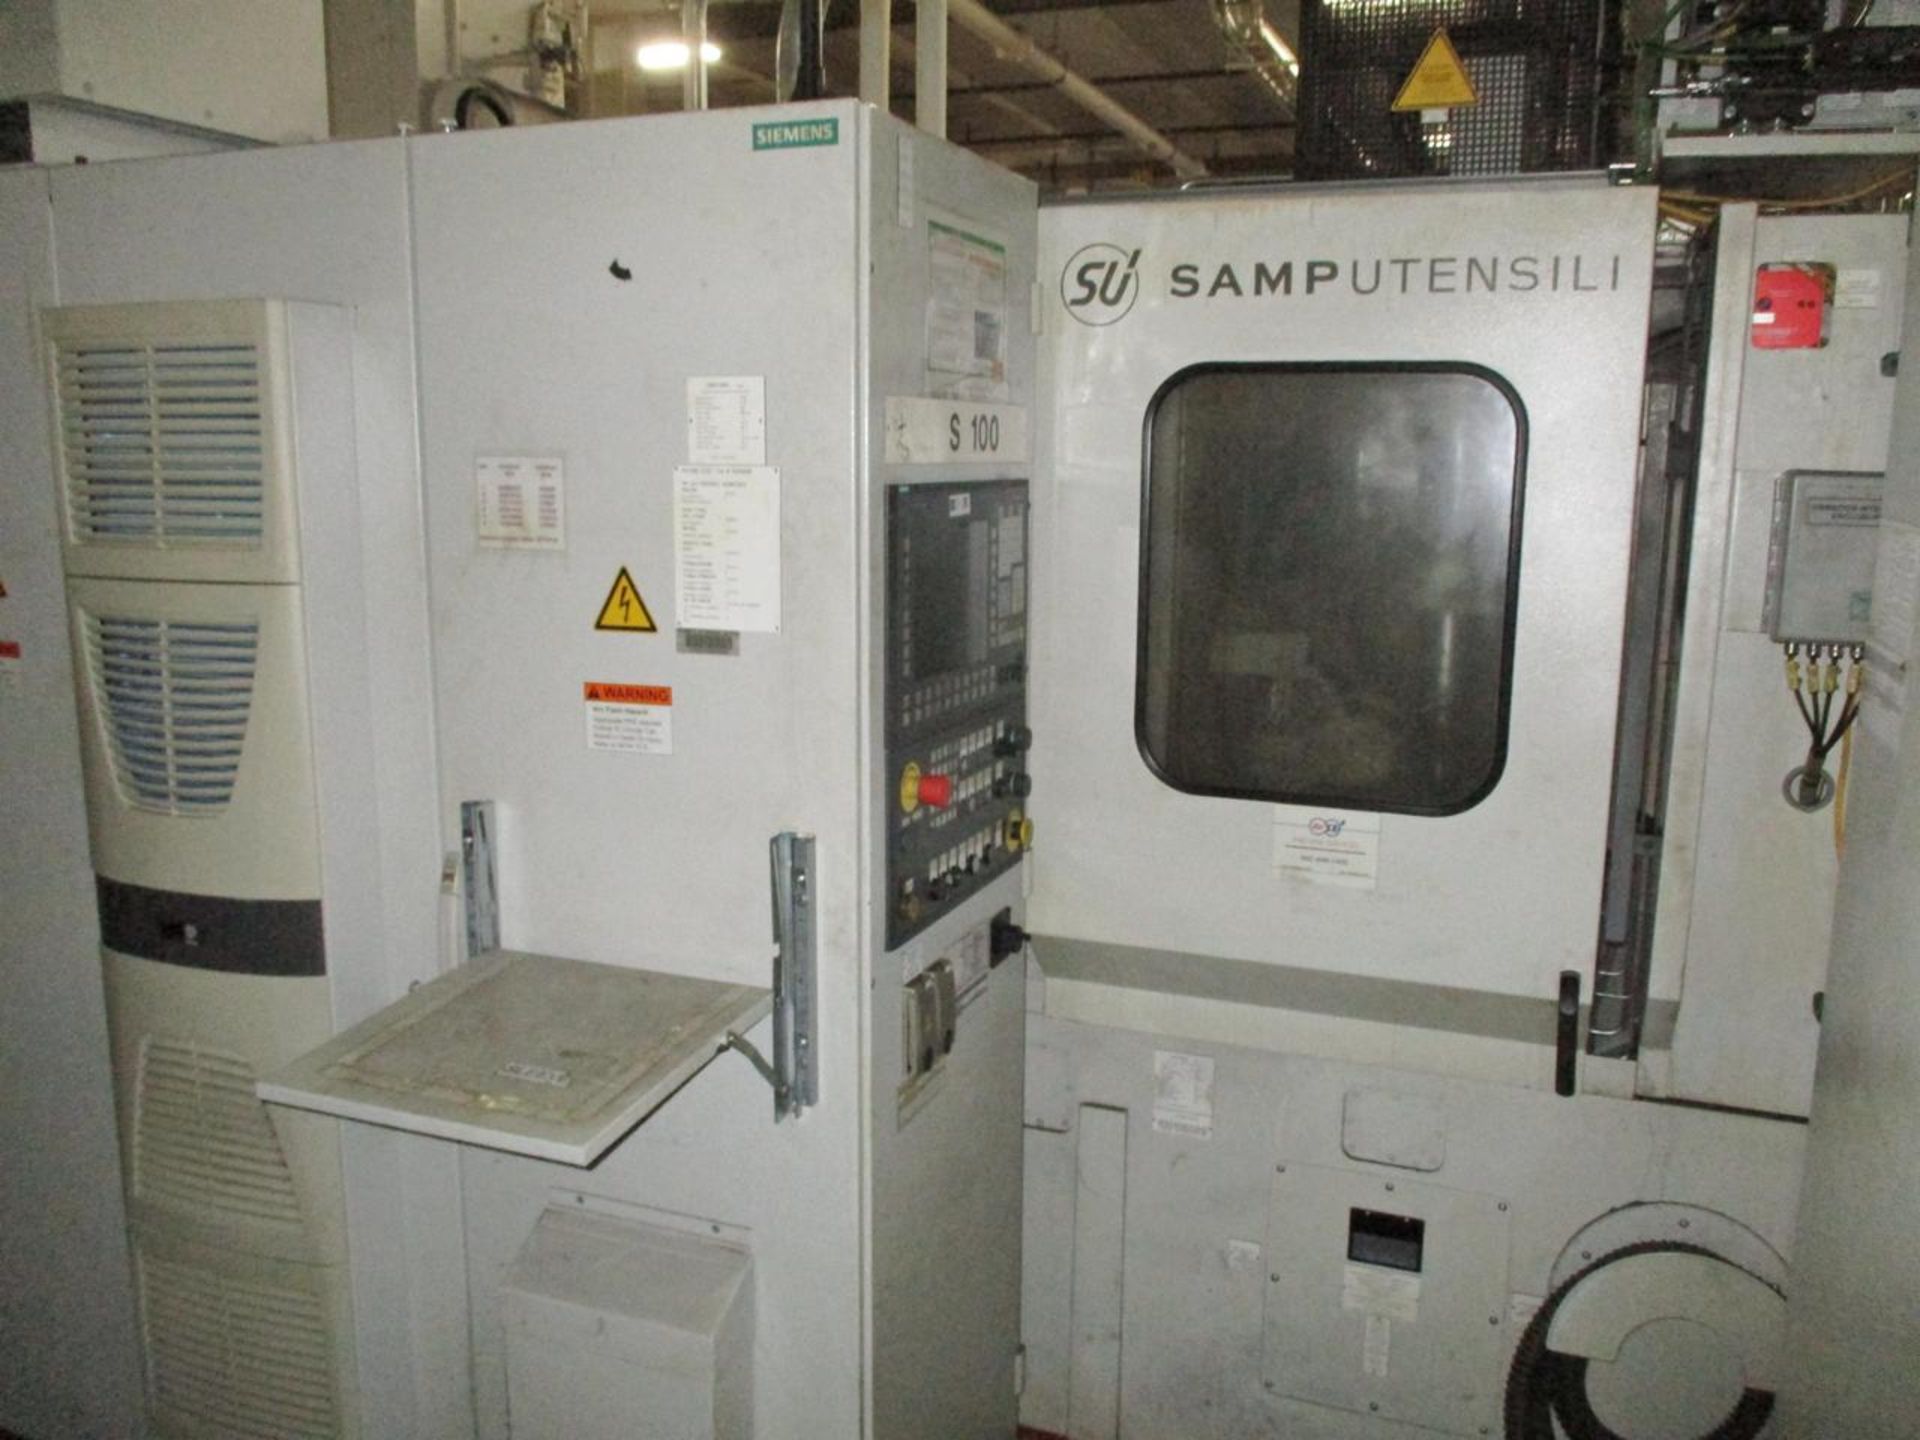 2009 Samputensilli S100 CNC Gear Hobber - Image 5 of 9